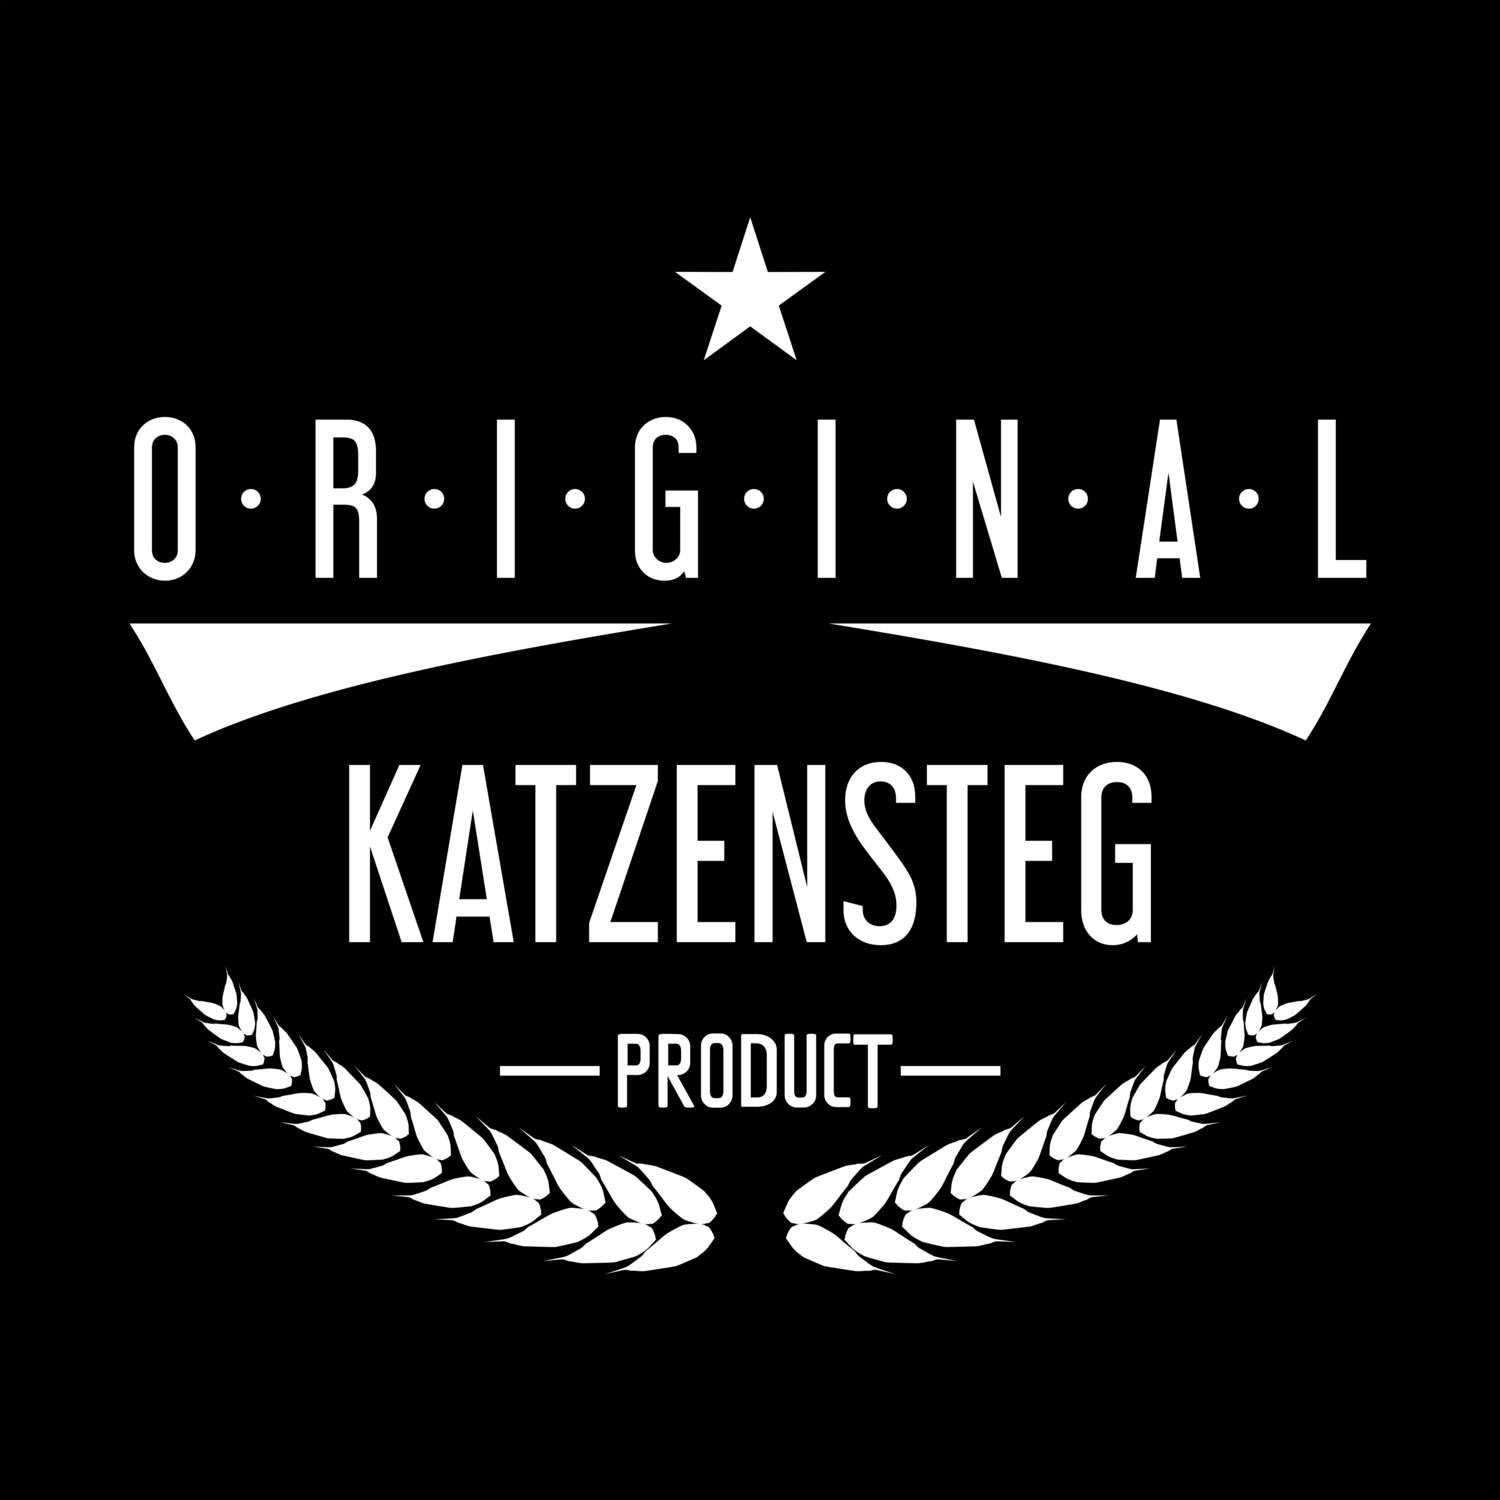 Katzensteg T-Shirt »Original Product«